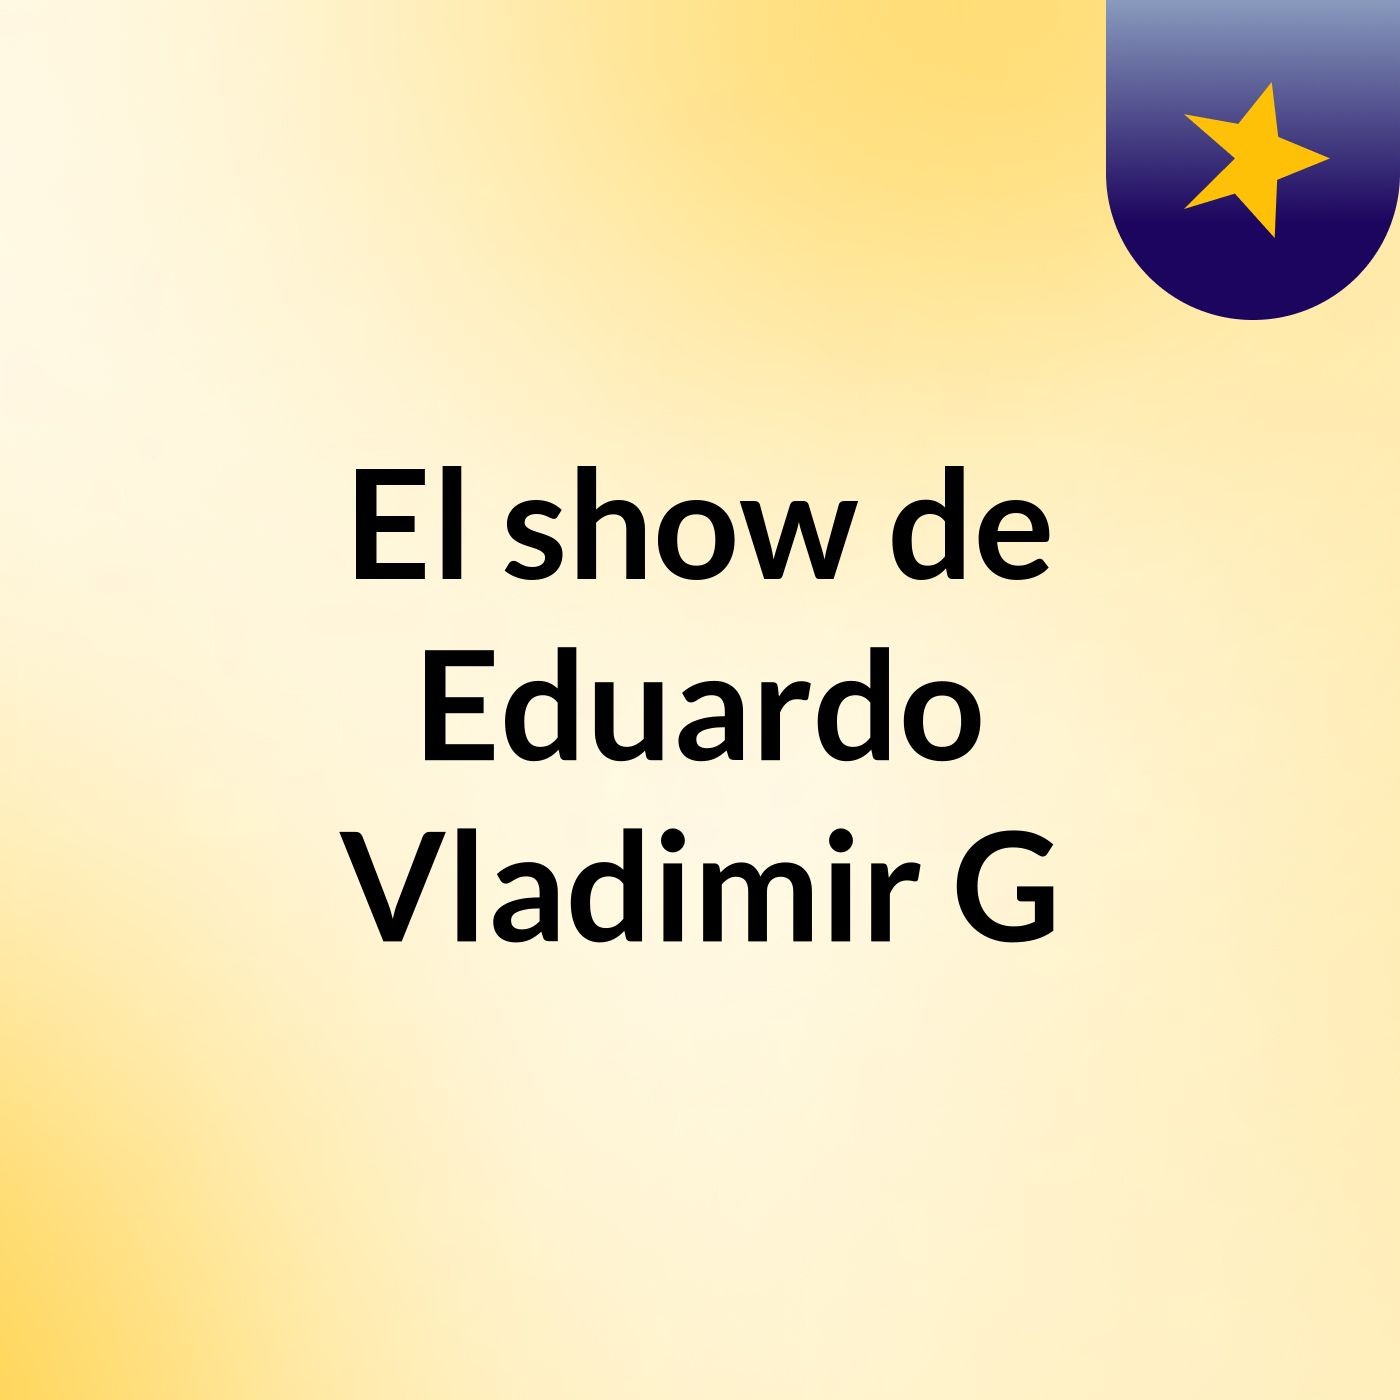 El show de Eduardo Vladimir G